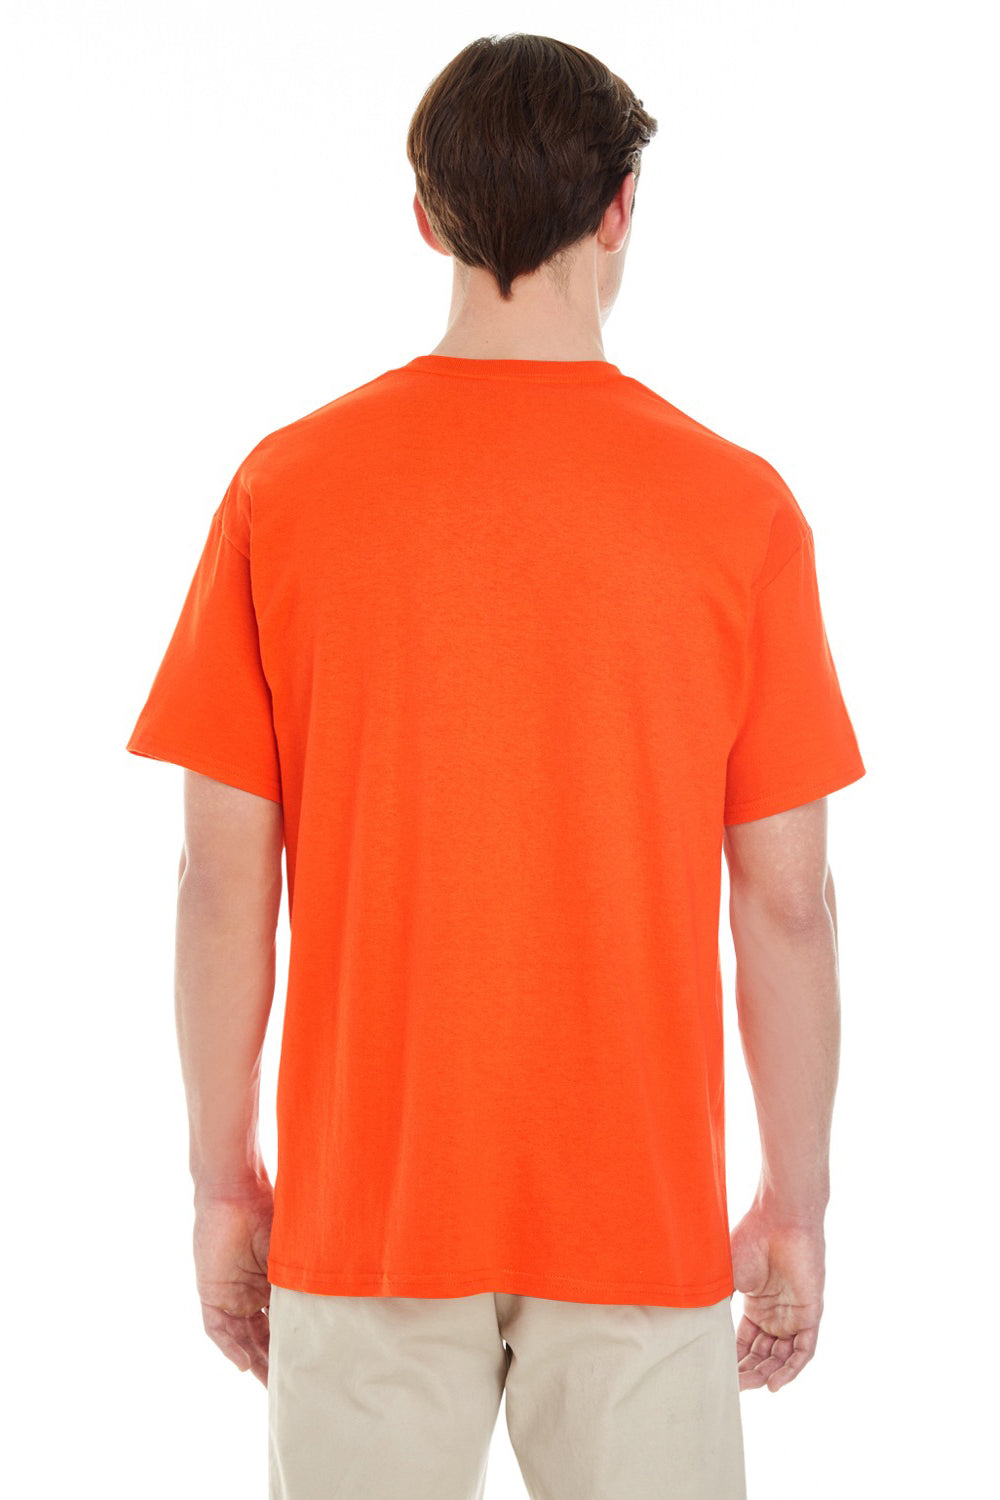 Gildan G530 Mens Short Sleeve Crewneck T-Shirt w/ Pocket Orange Back